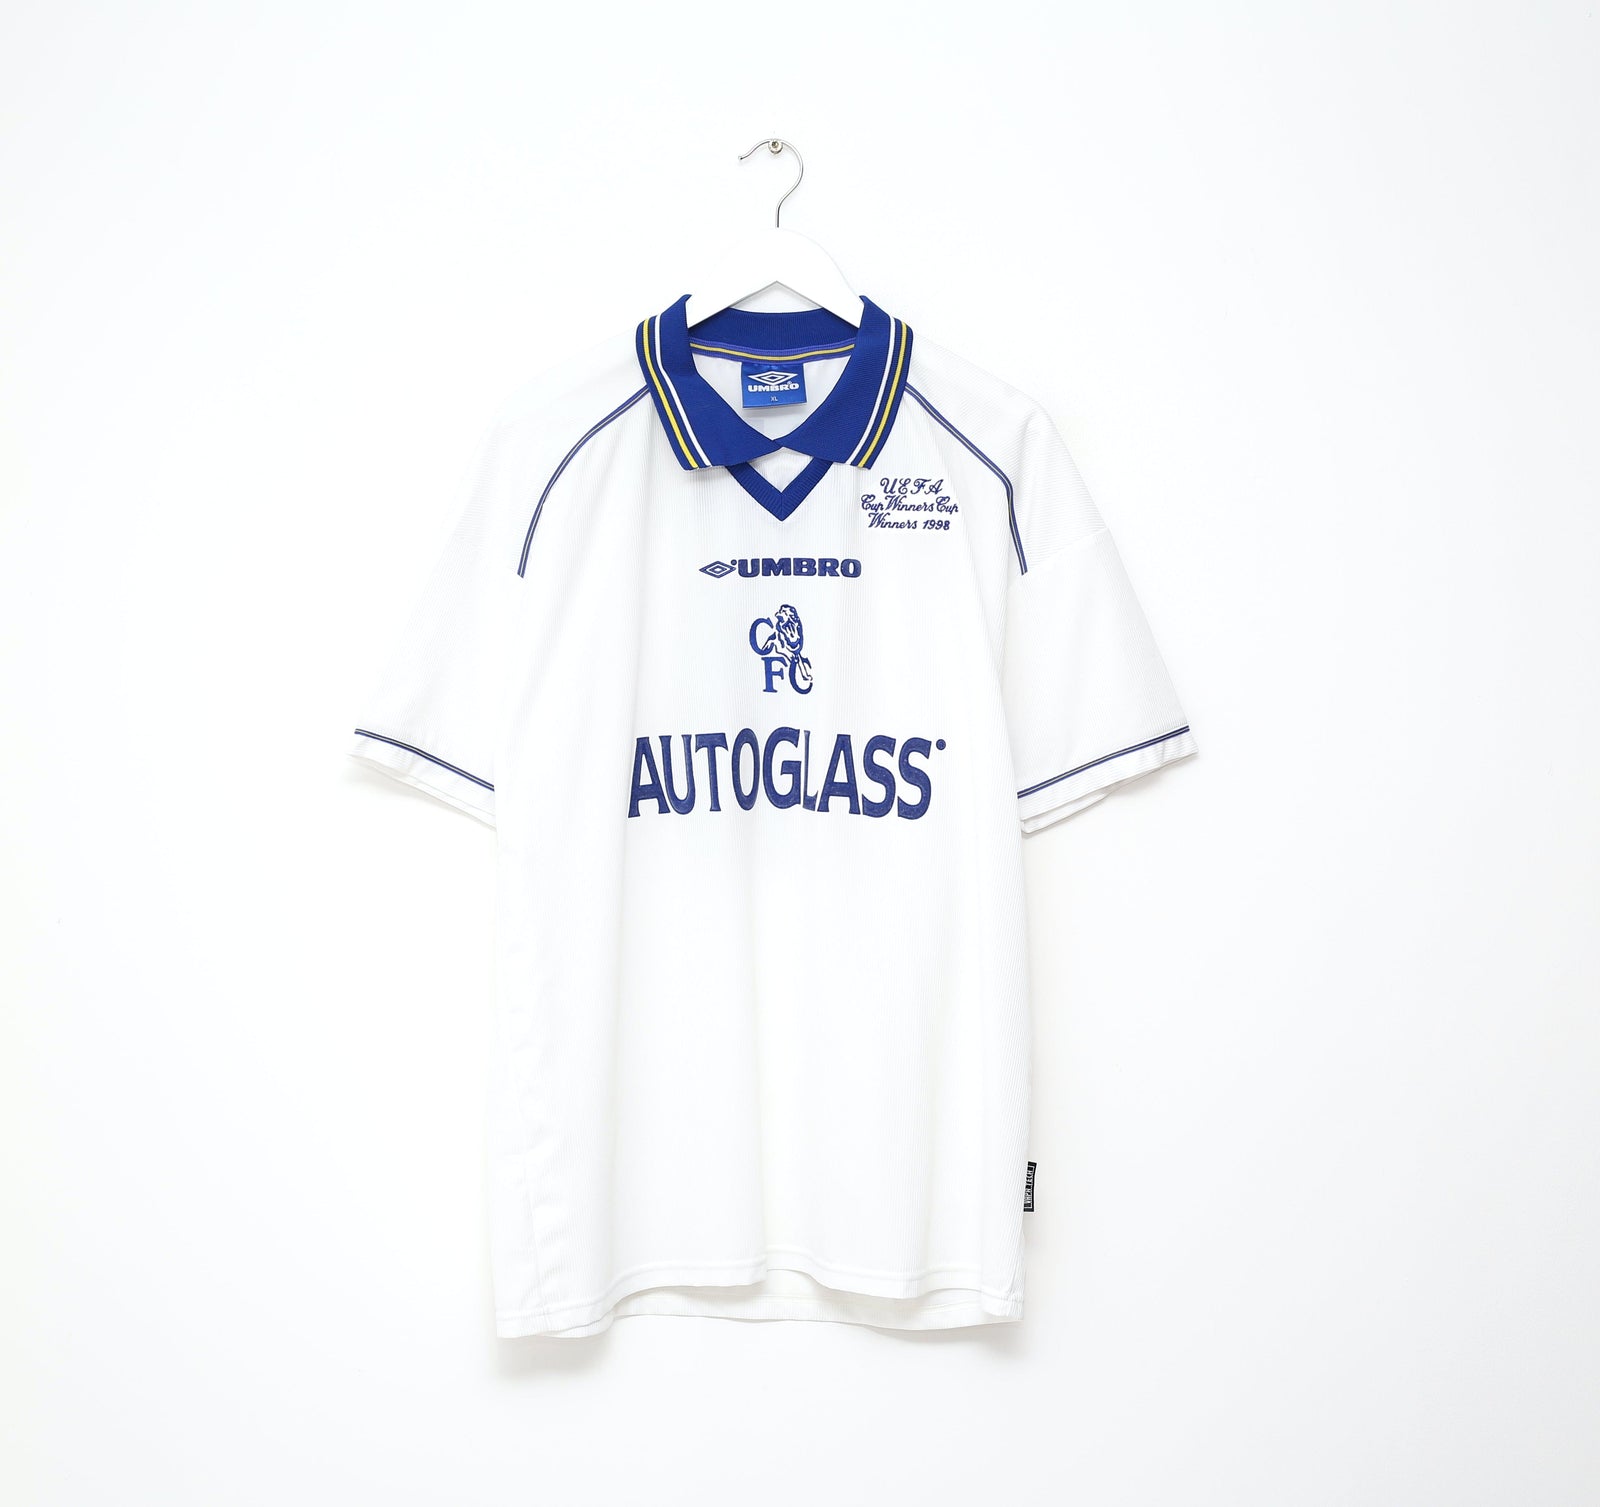 1998/99 VIALLI #9 Chelsea Vintage Umbro CUP WINNERS CUP 1998 Football Shirt (XL)